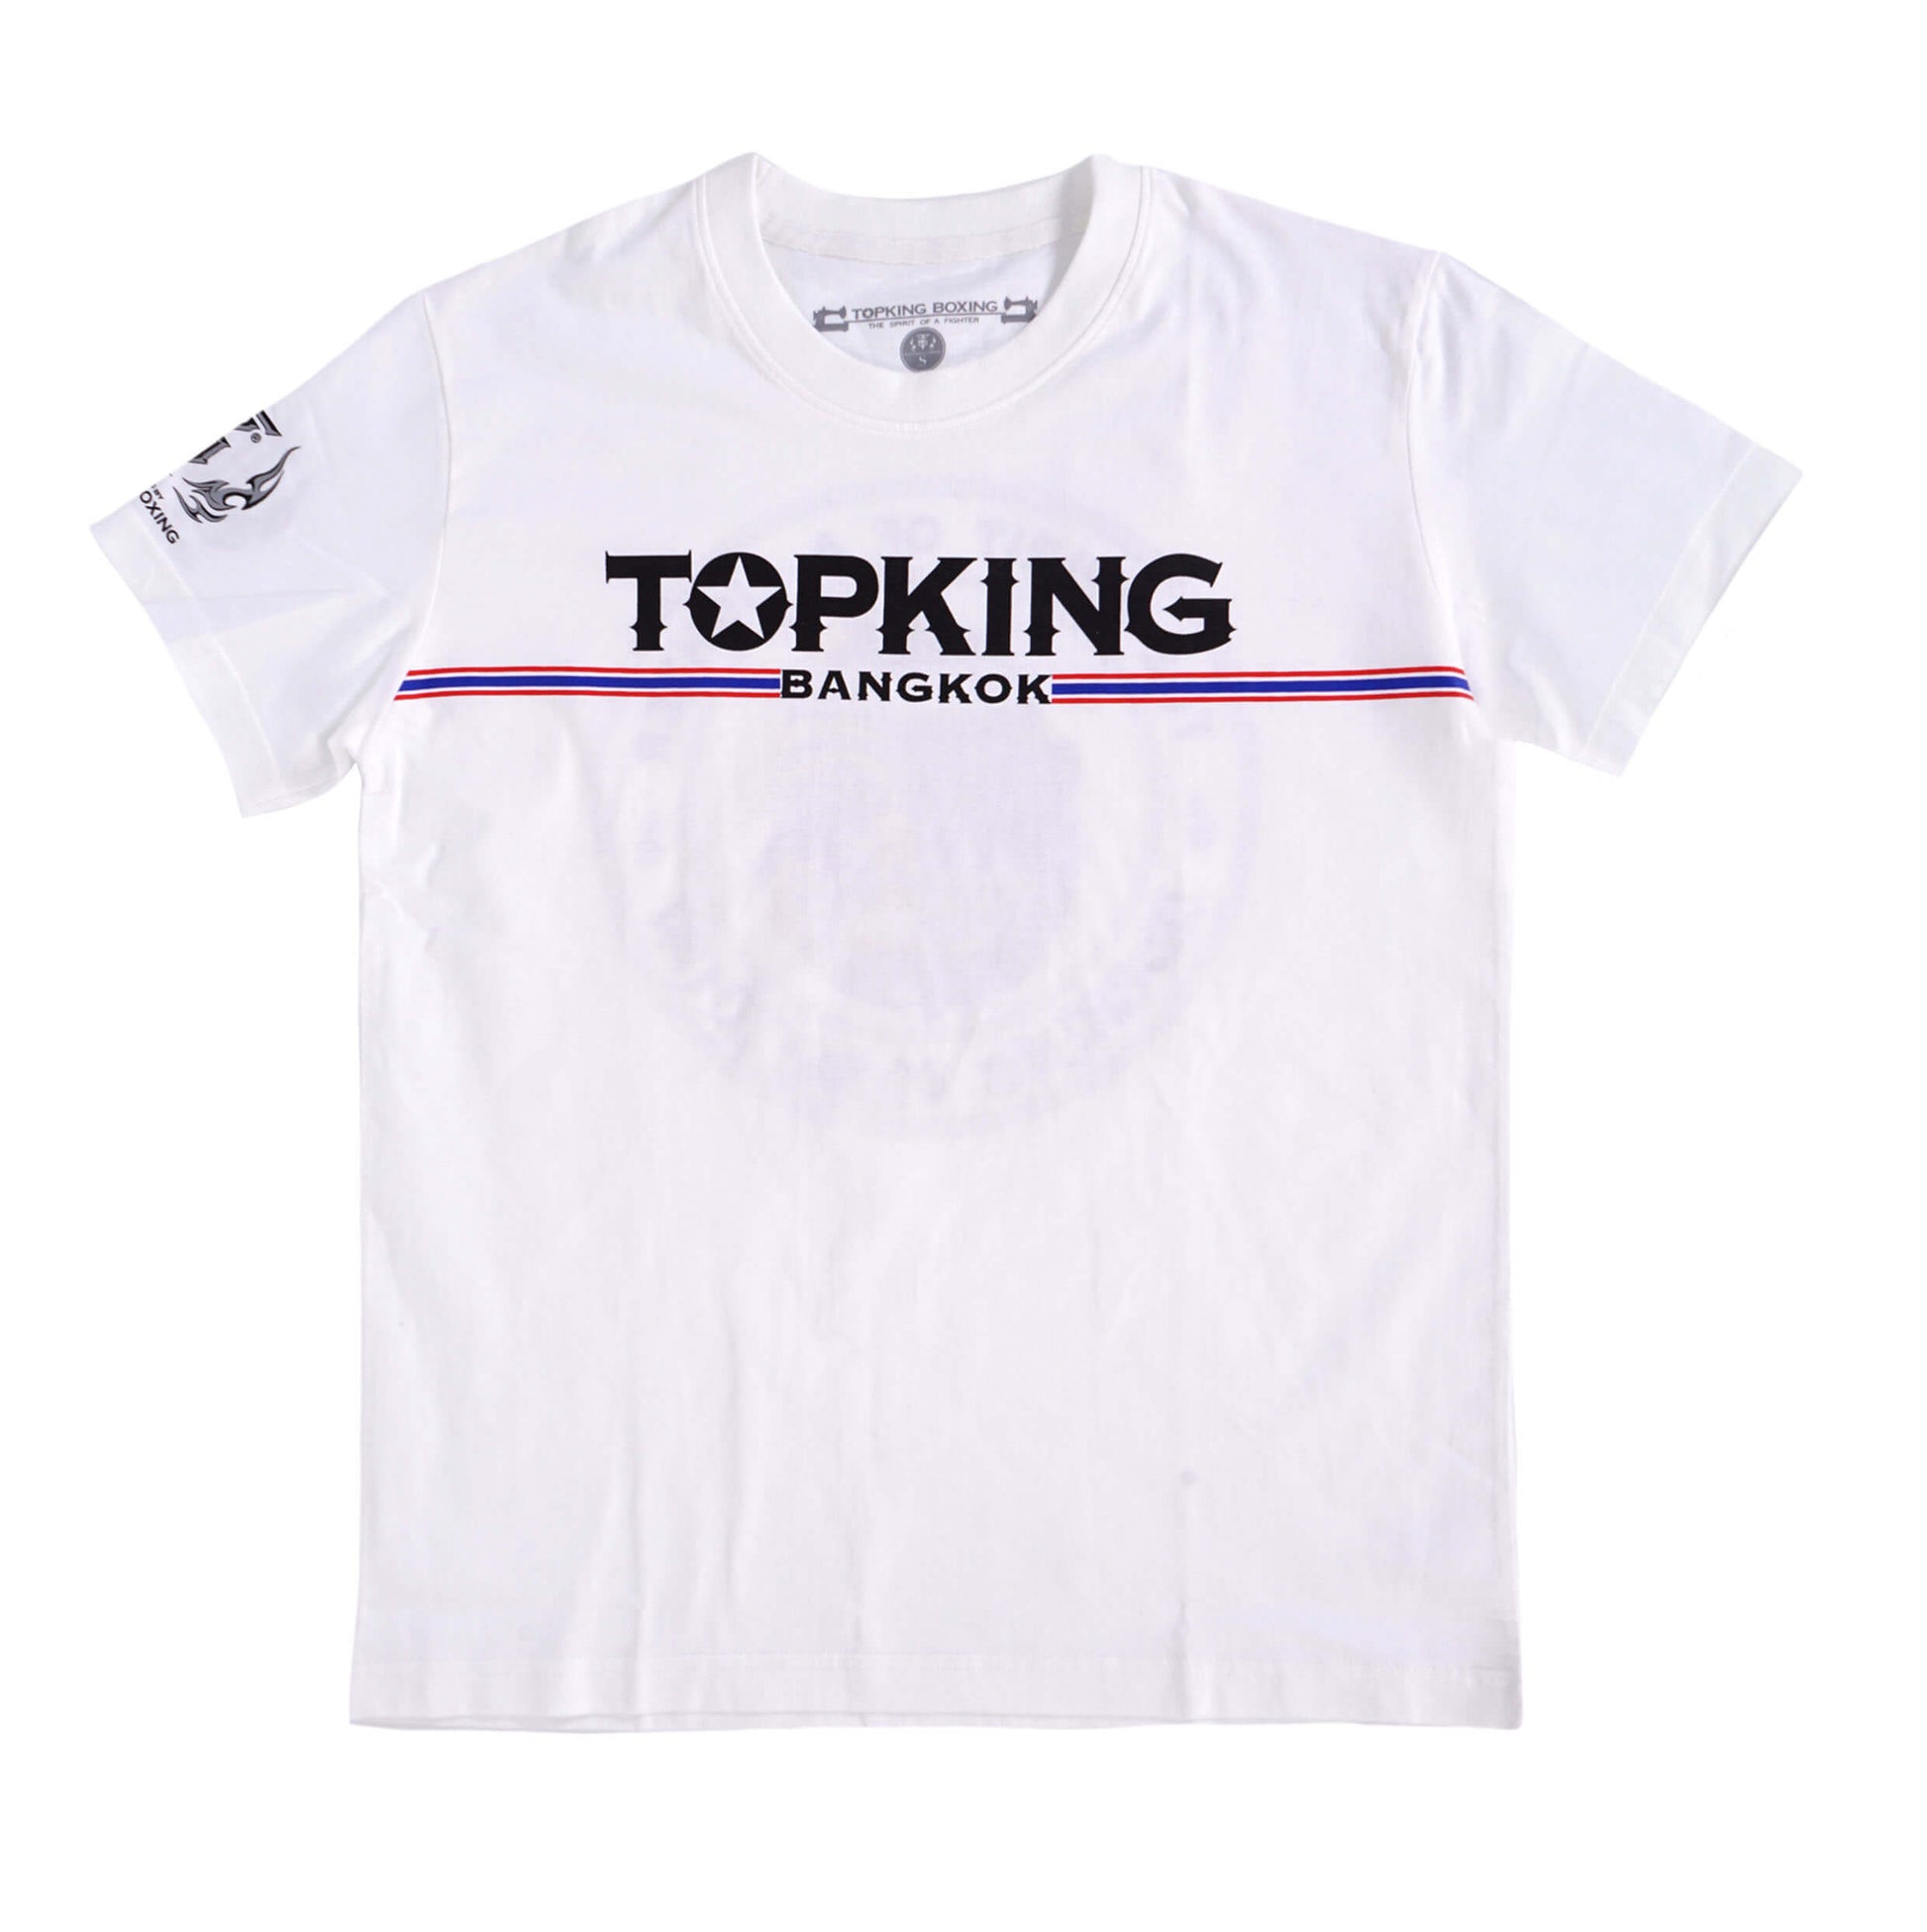 Top King Boxing t-shirt: Bangkok 'spirit of a fighter' white front